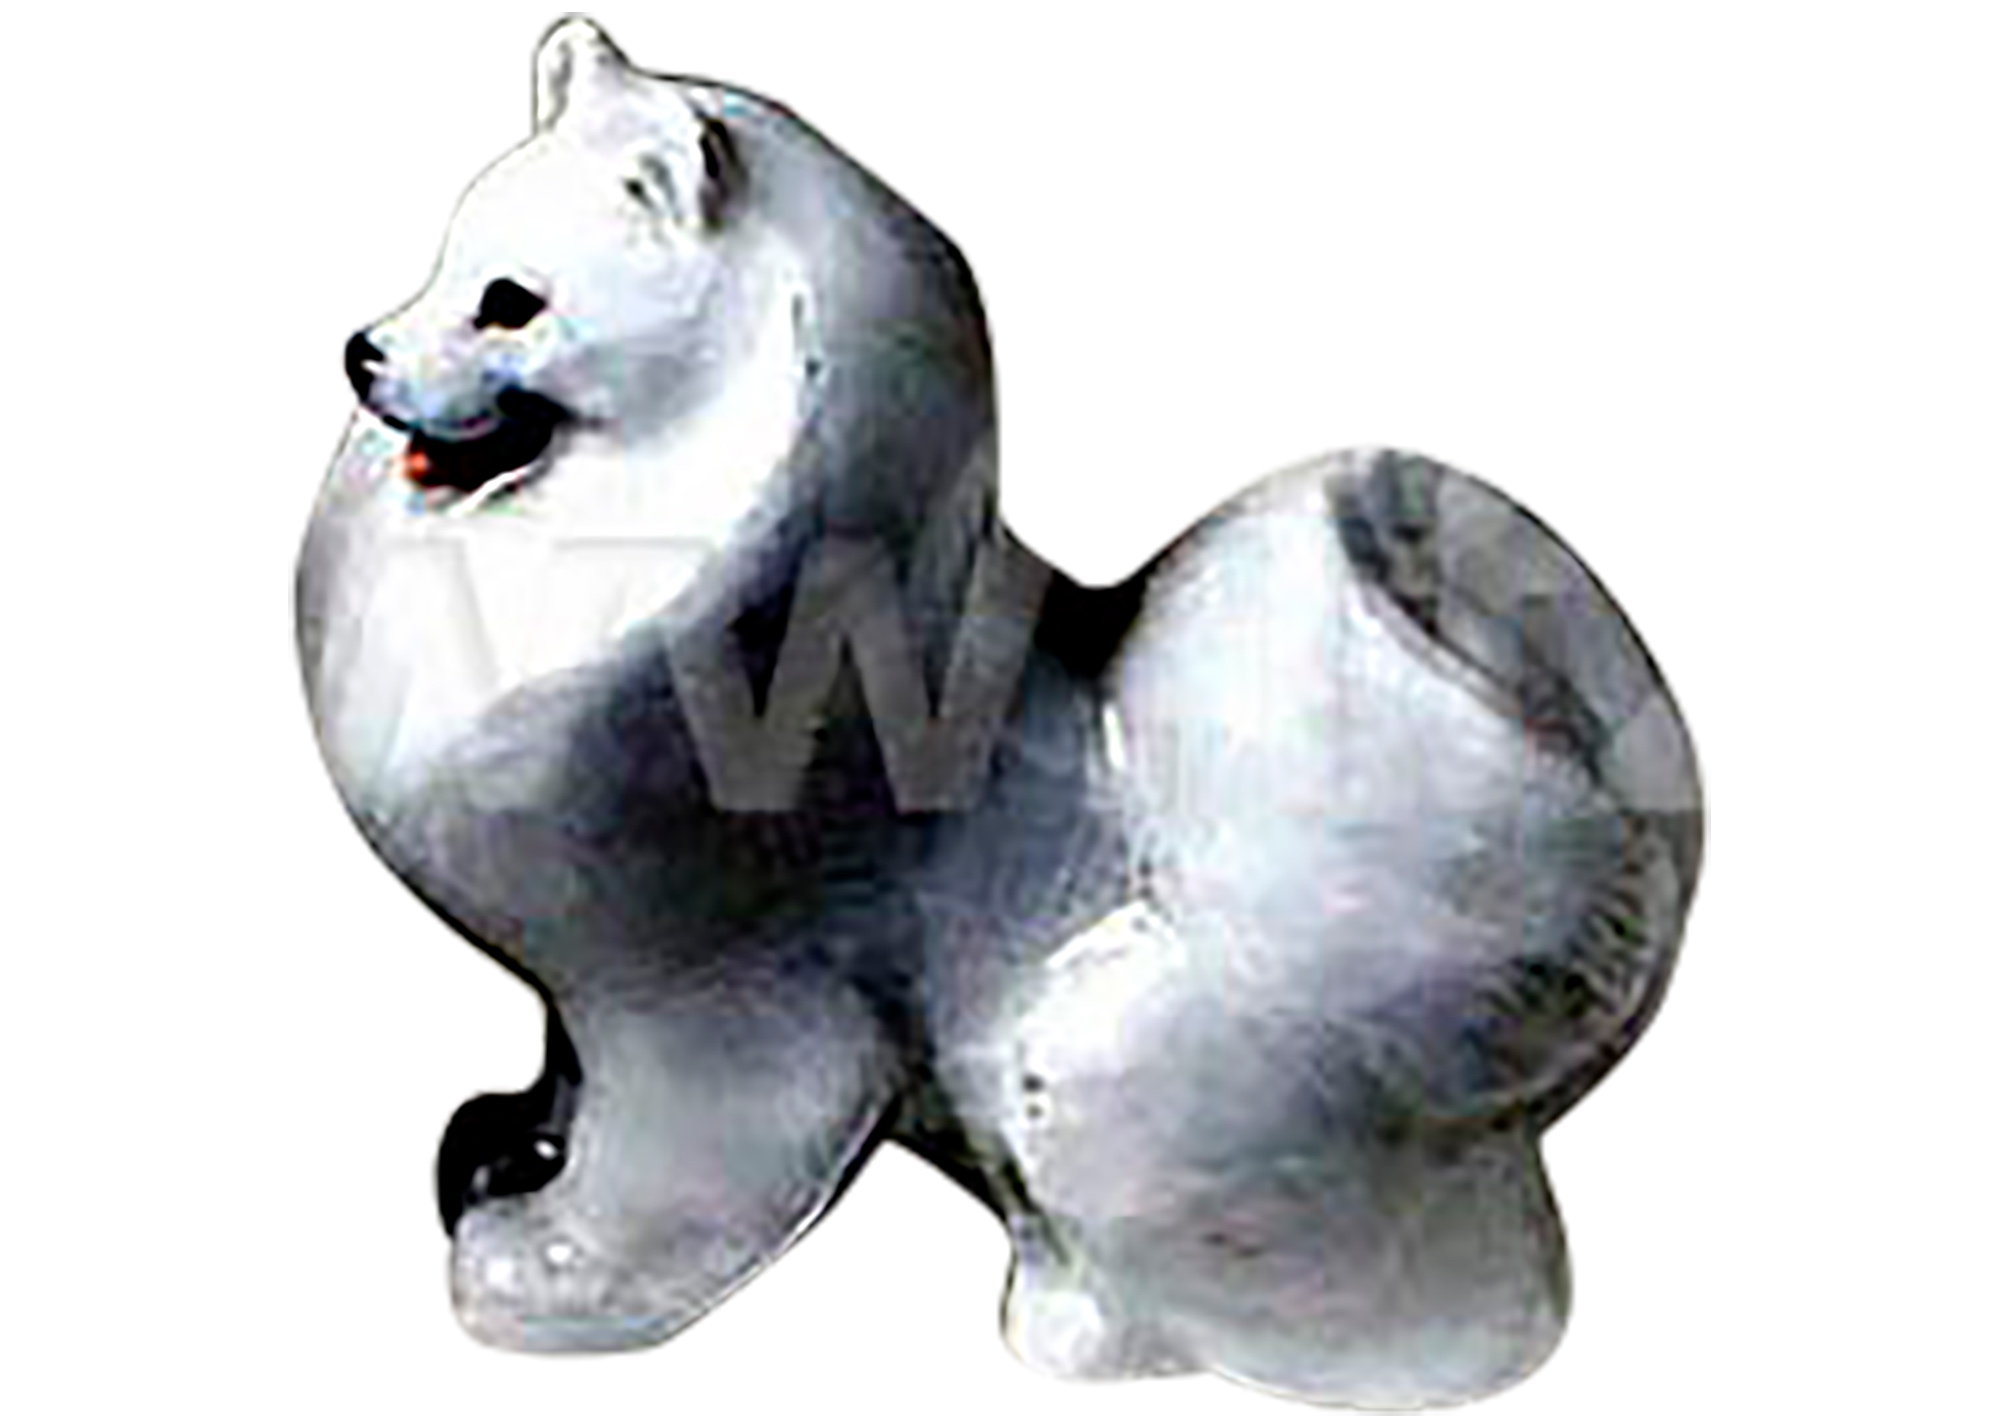 Buy American Eskimo Spitz Dog Figurine at GoldenCockerel.com